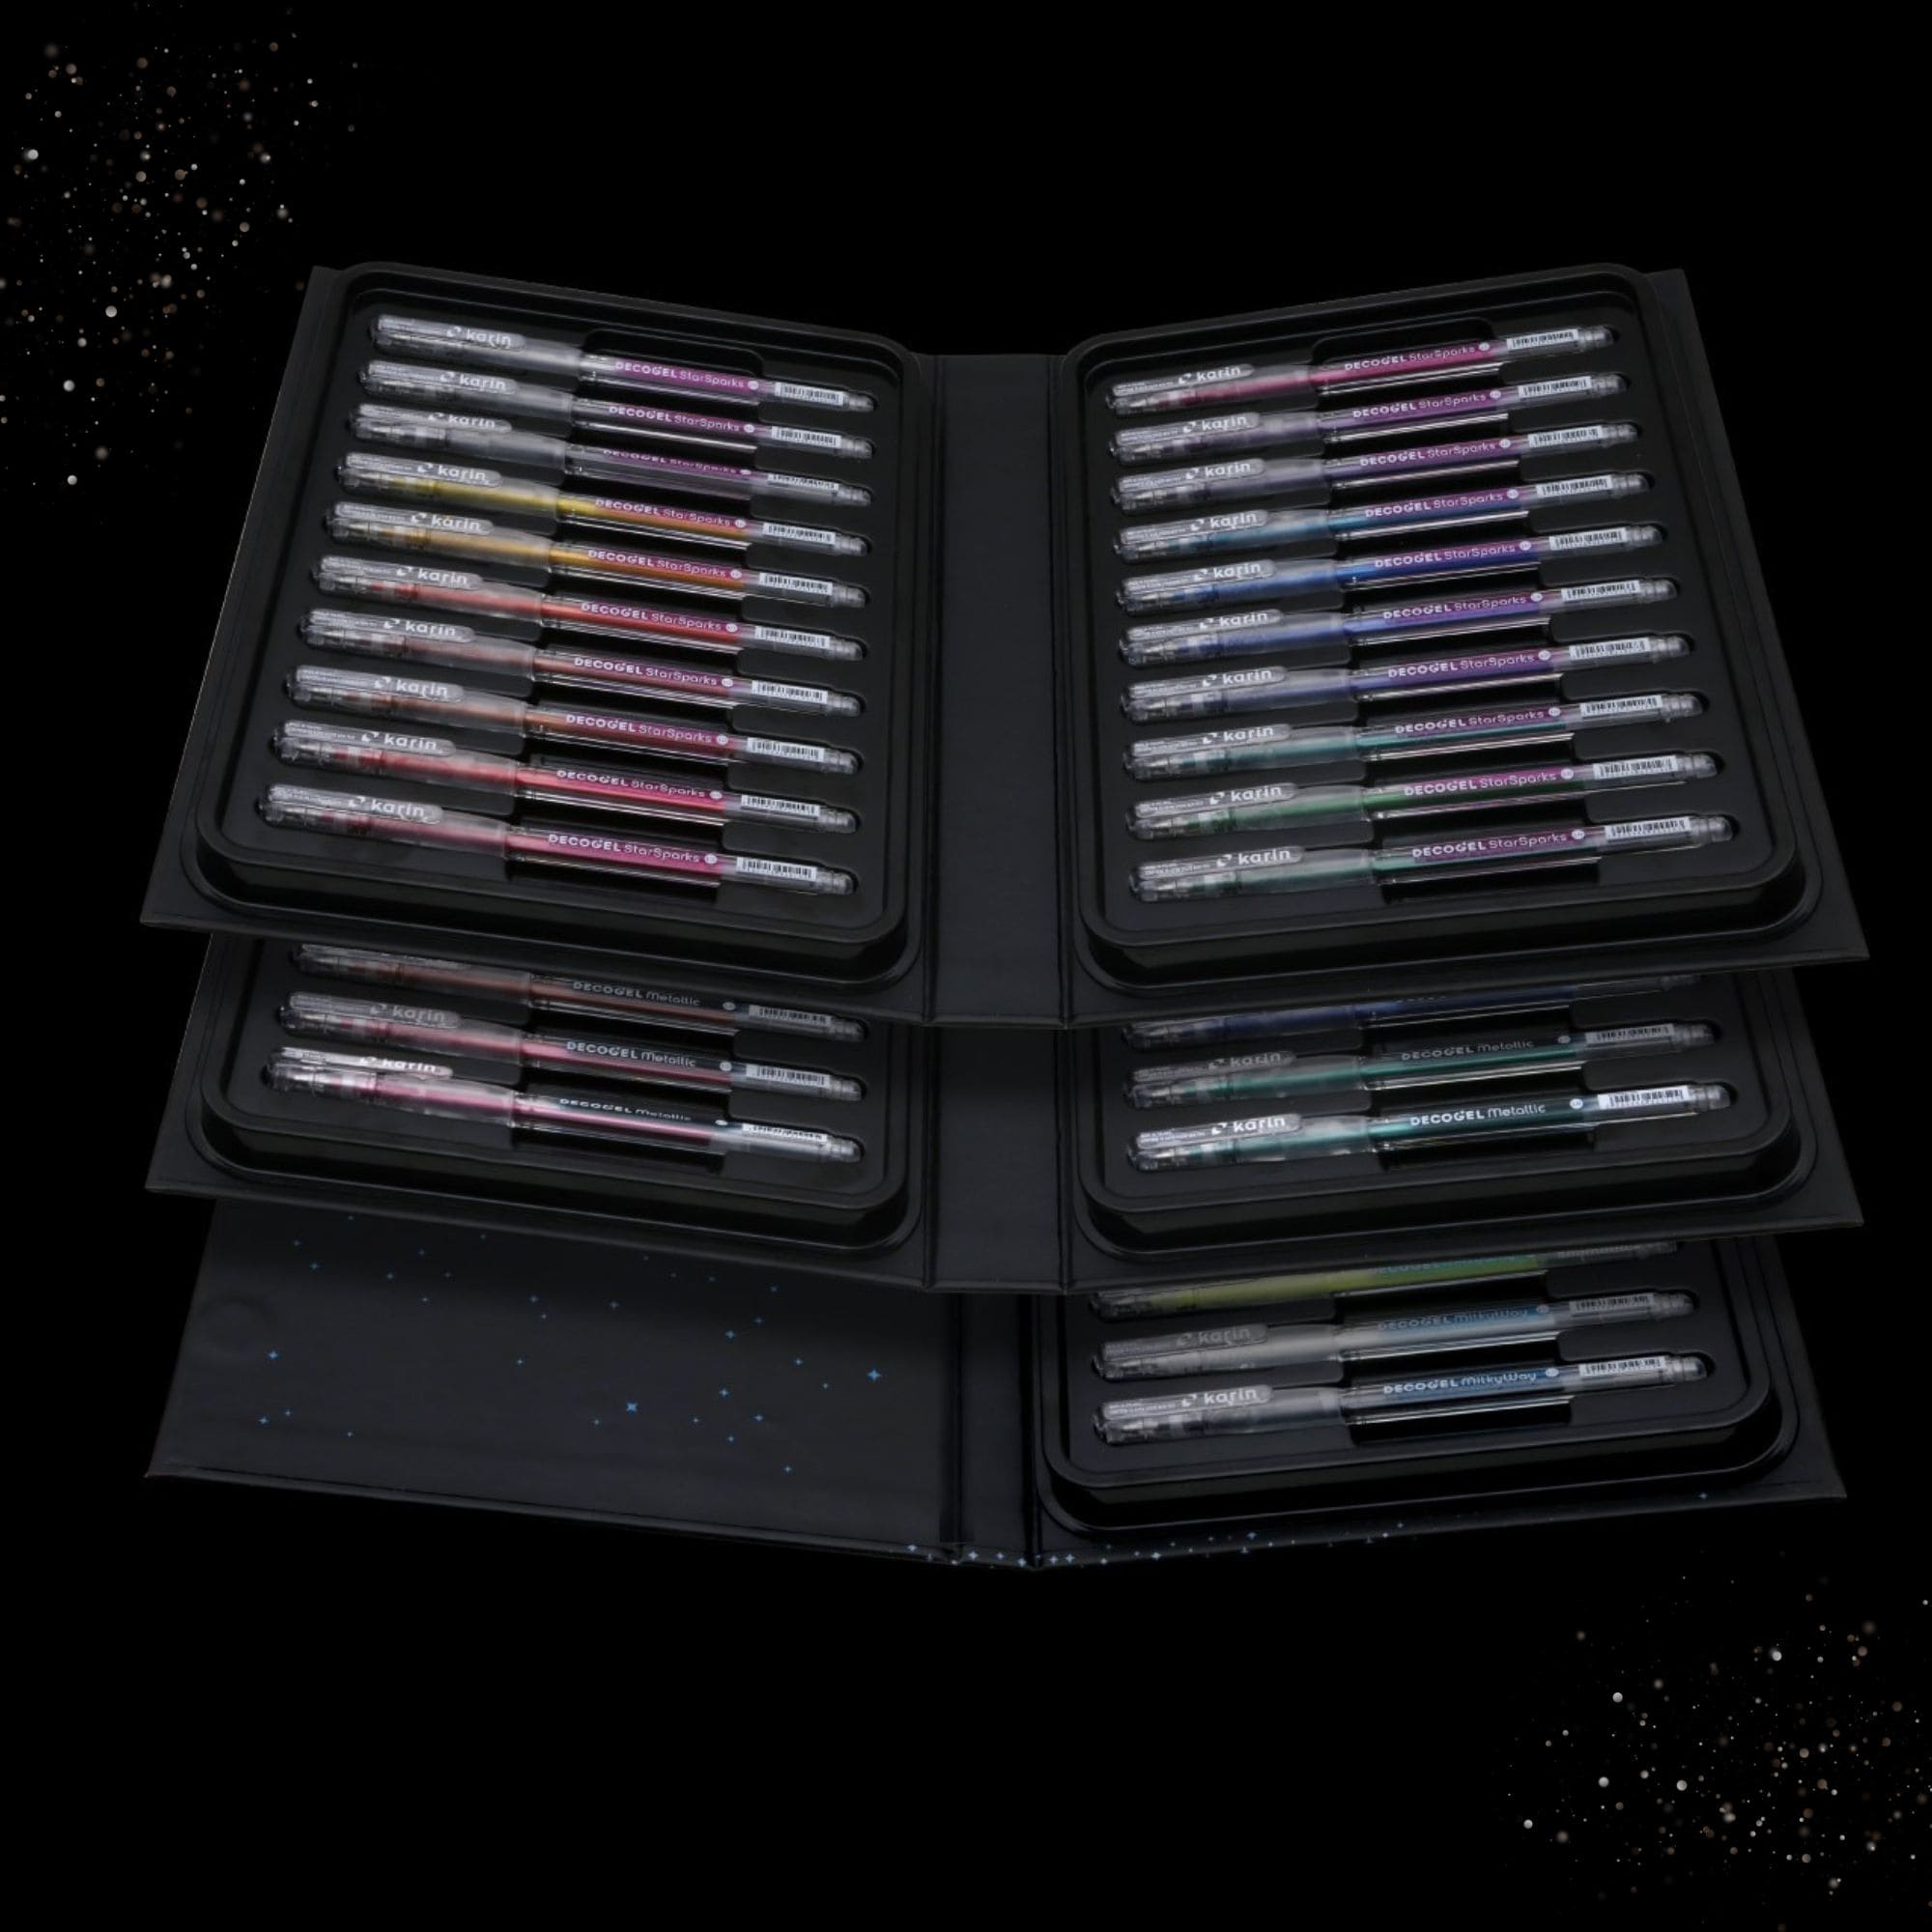 Karin Markers DECOGEL 1.0 - Cosmic Collection - 50 Gel Pens and 10 Refills Set - Paper Kooka Australia